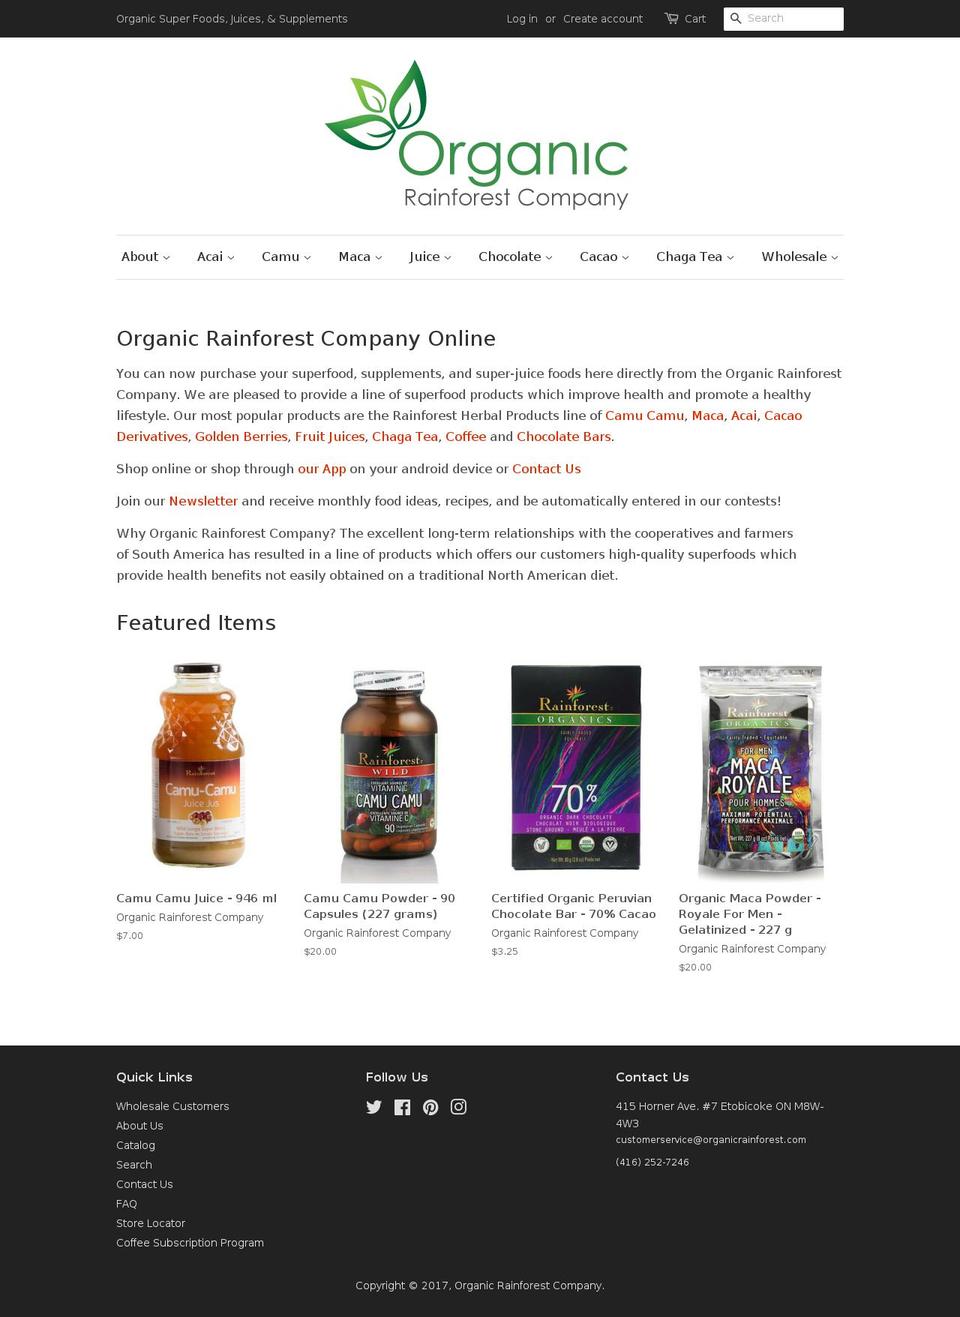 organicrainforest.com shopify website screenshot